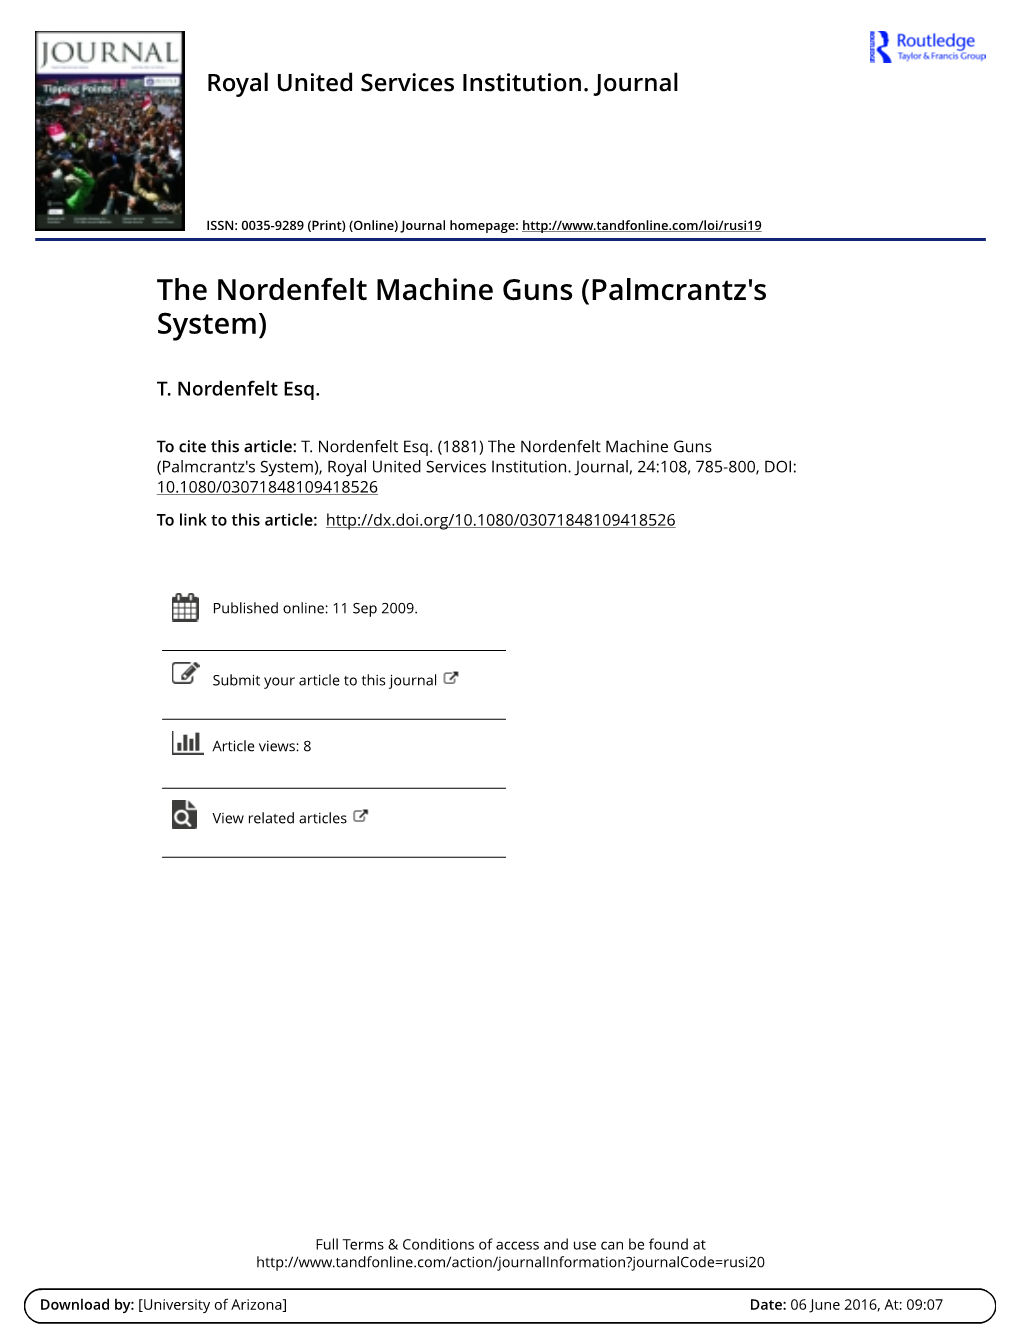 The Nordenfelt Machine Guns (Palmcrantz's System)